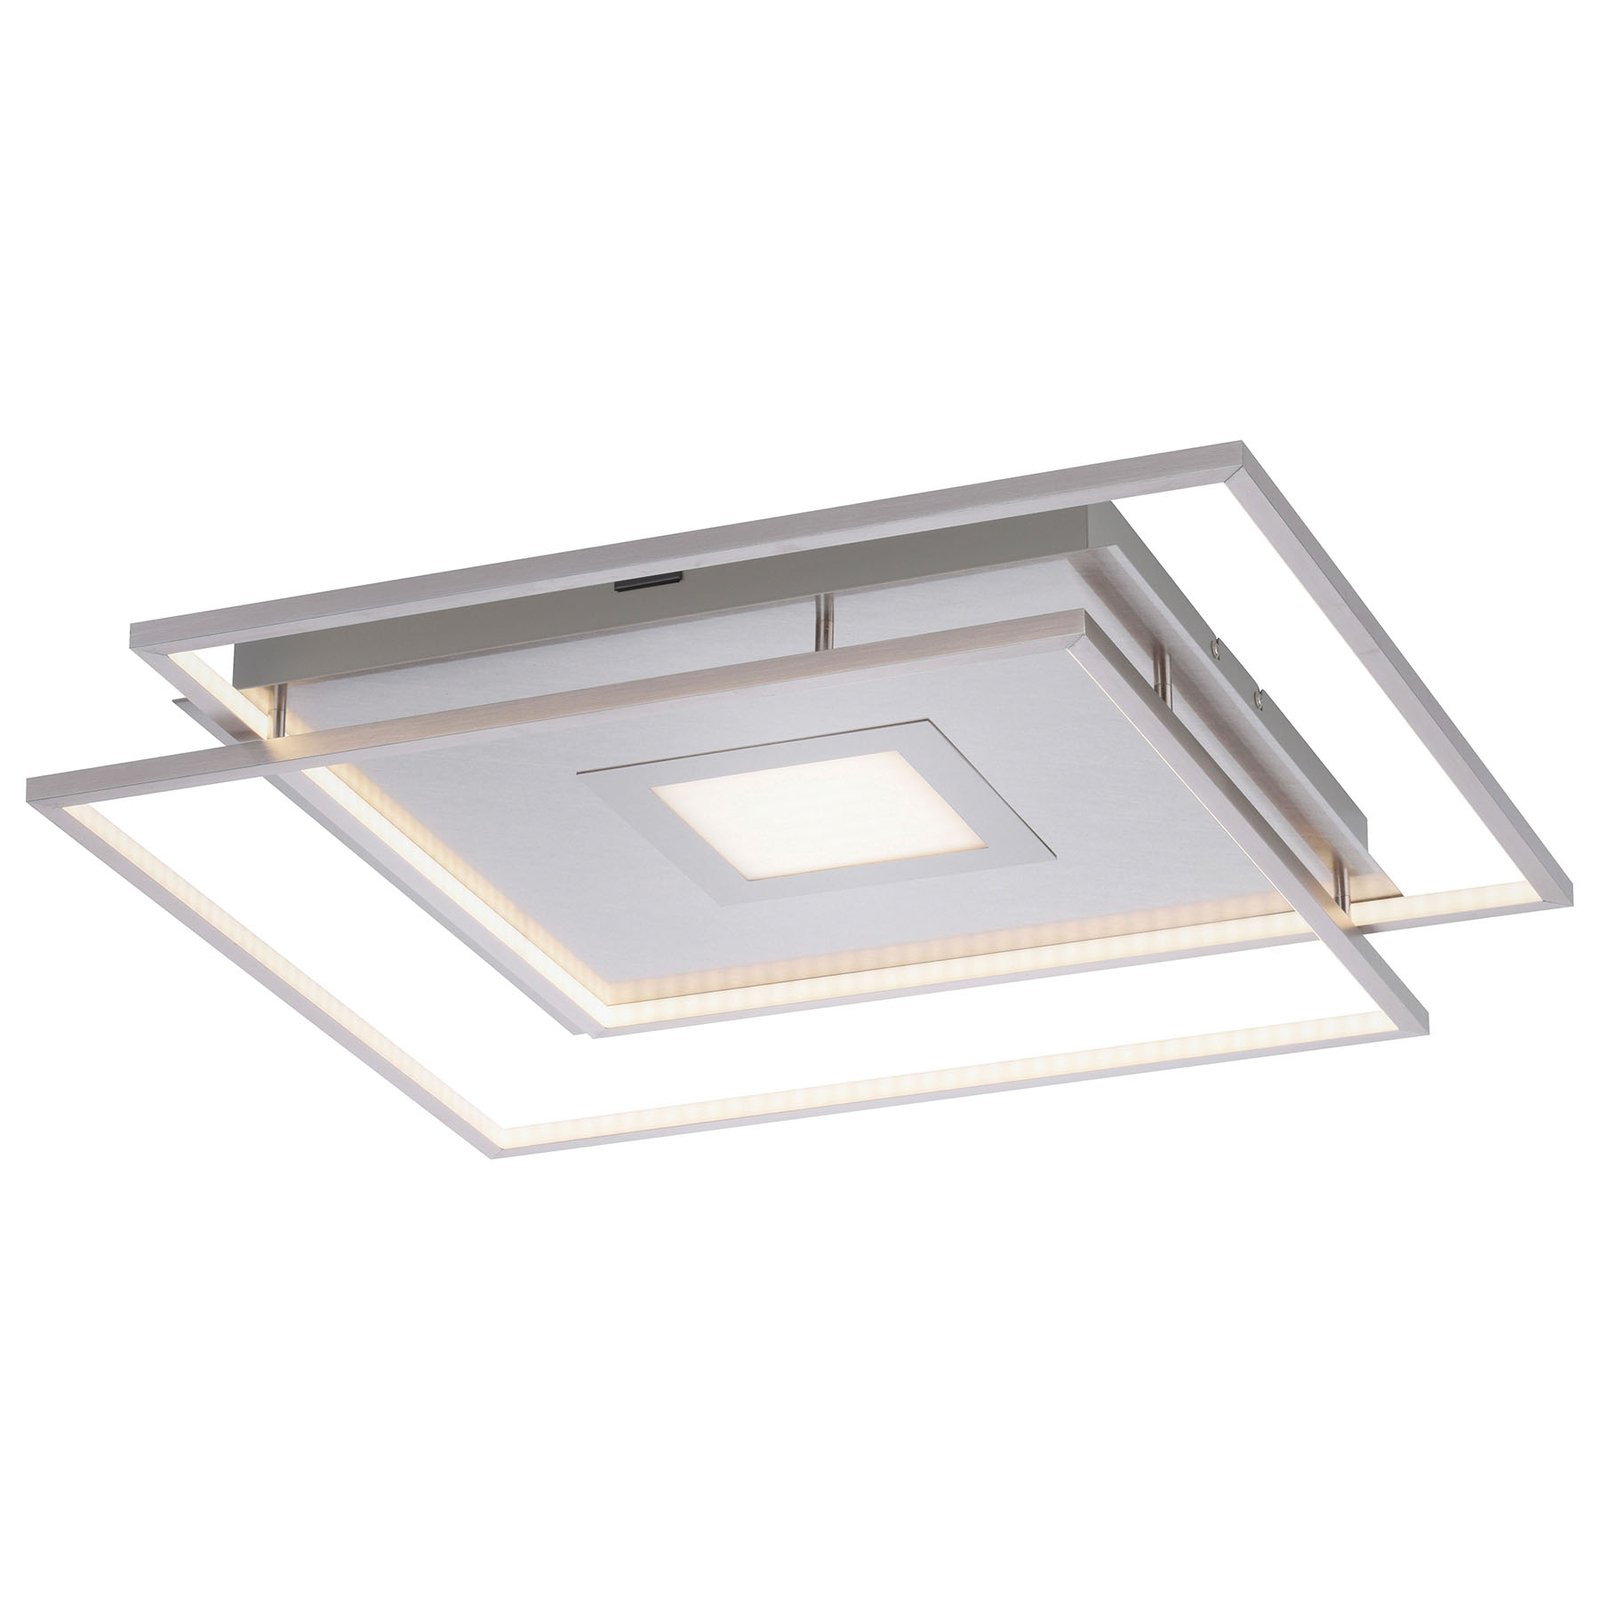 Paul Neuhaus Q-AMIRA LED plafondlamp, zilver